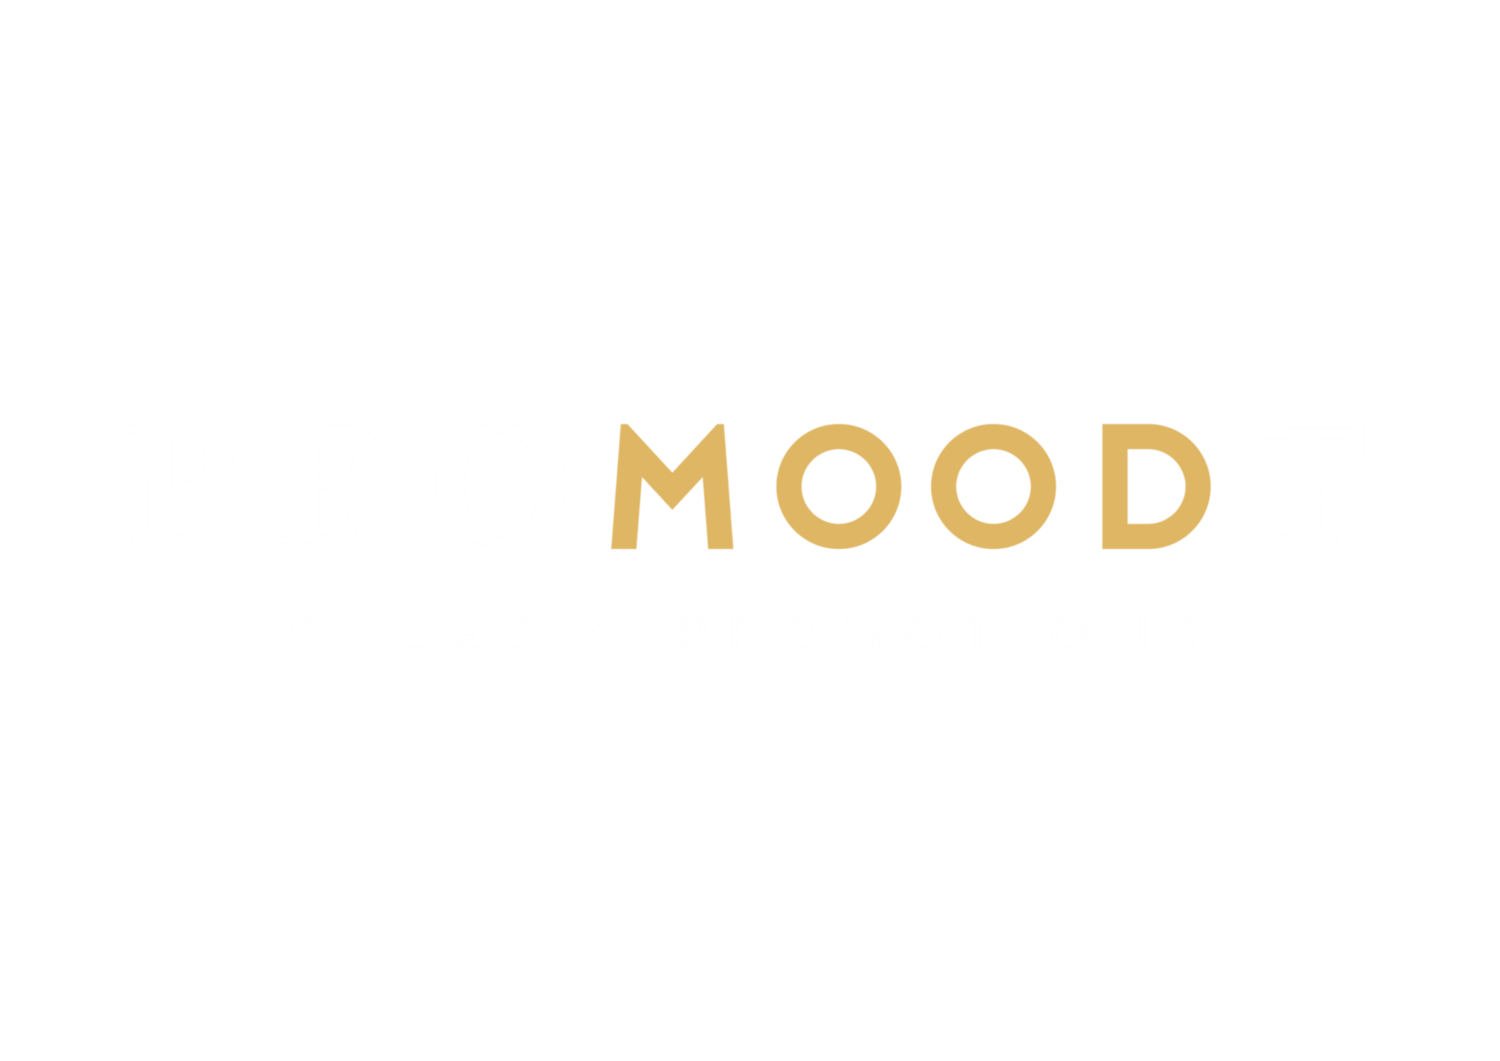 Promoodt Sales & Promotions